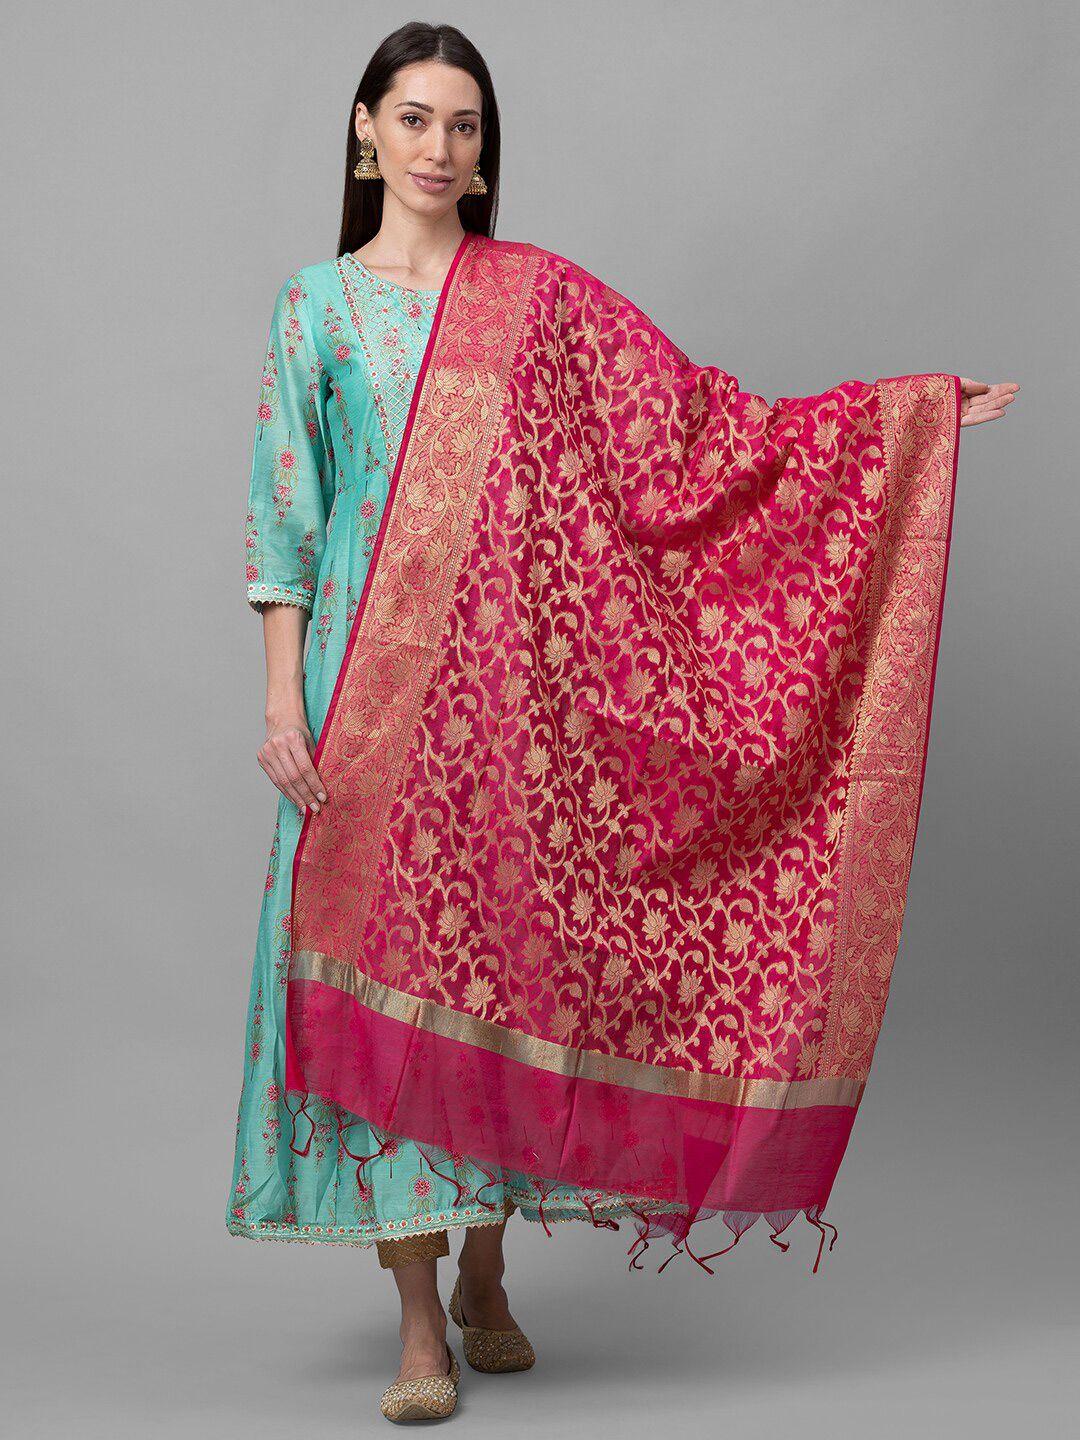 globus-pink-&-gold-toned-ethnic-motifs-woven-design-dupatta-with-zari